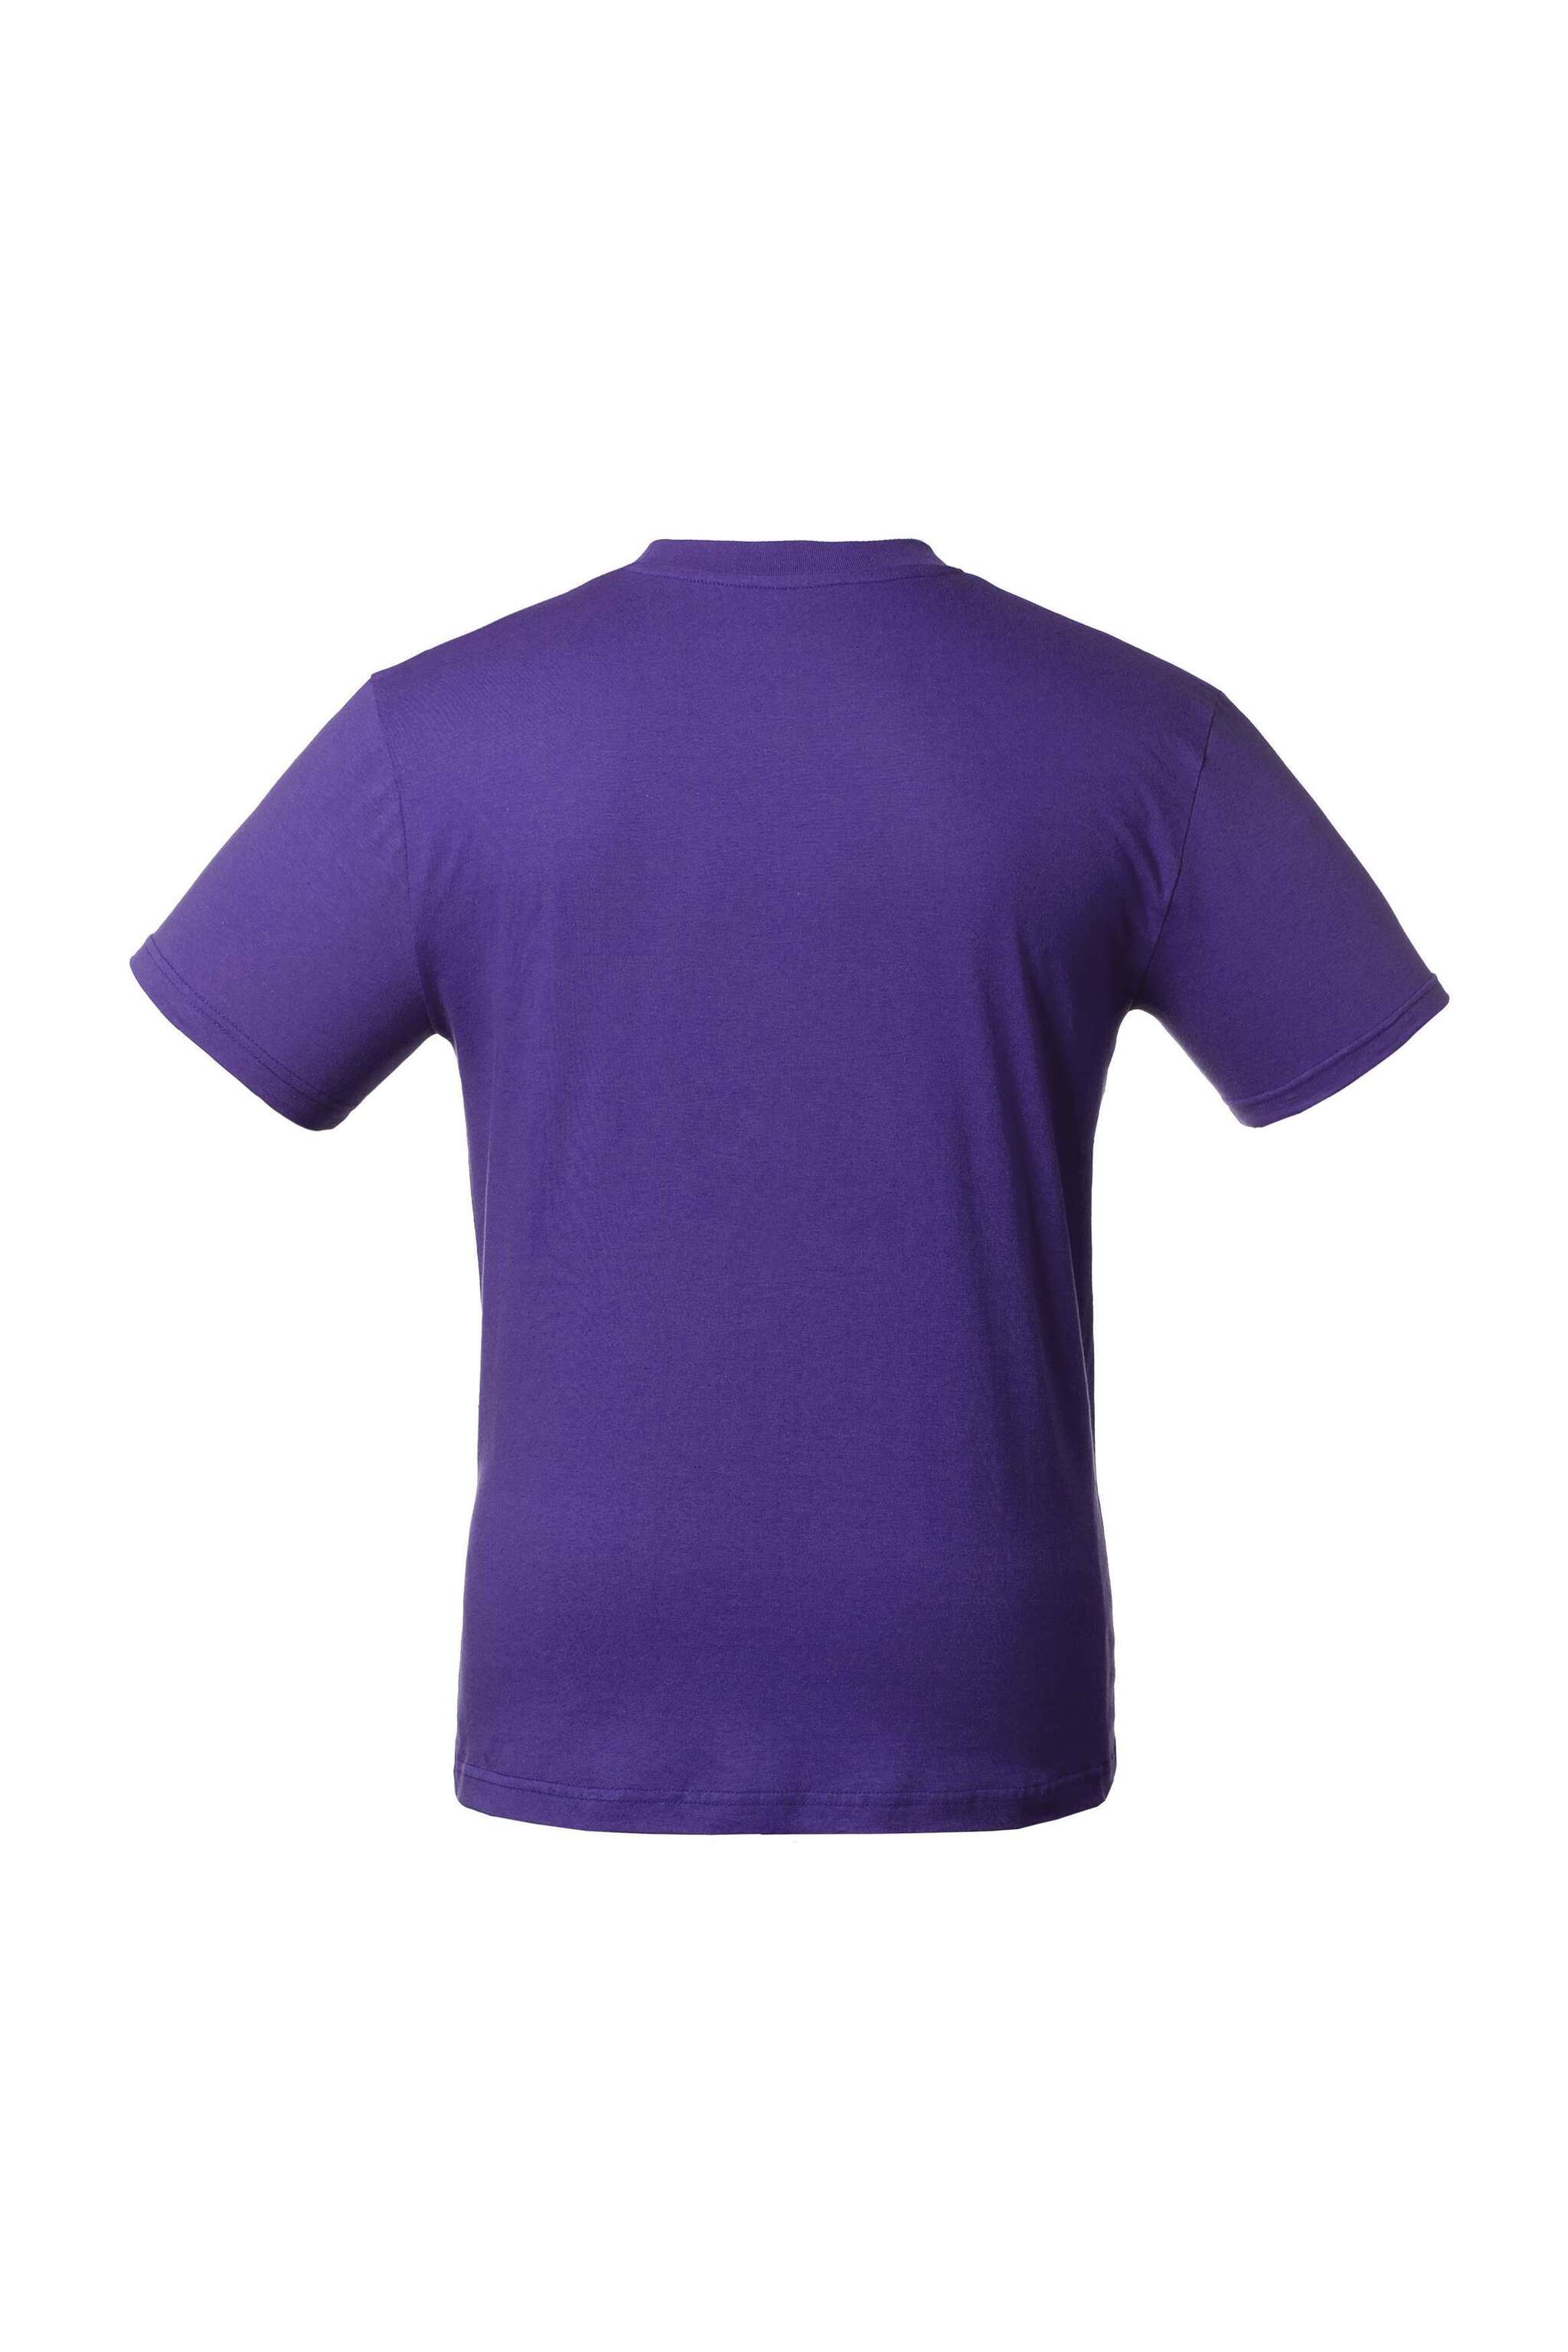 Футболка фиолетовая купить. Футболка унисекс t-Bolka. Фиолетовая футболка. Фиолетовая футболка мужская. Сиреневая футболка мужская.